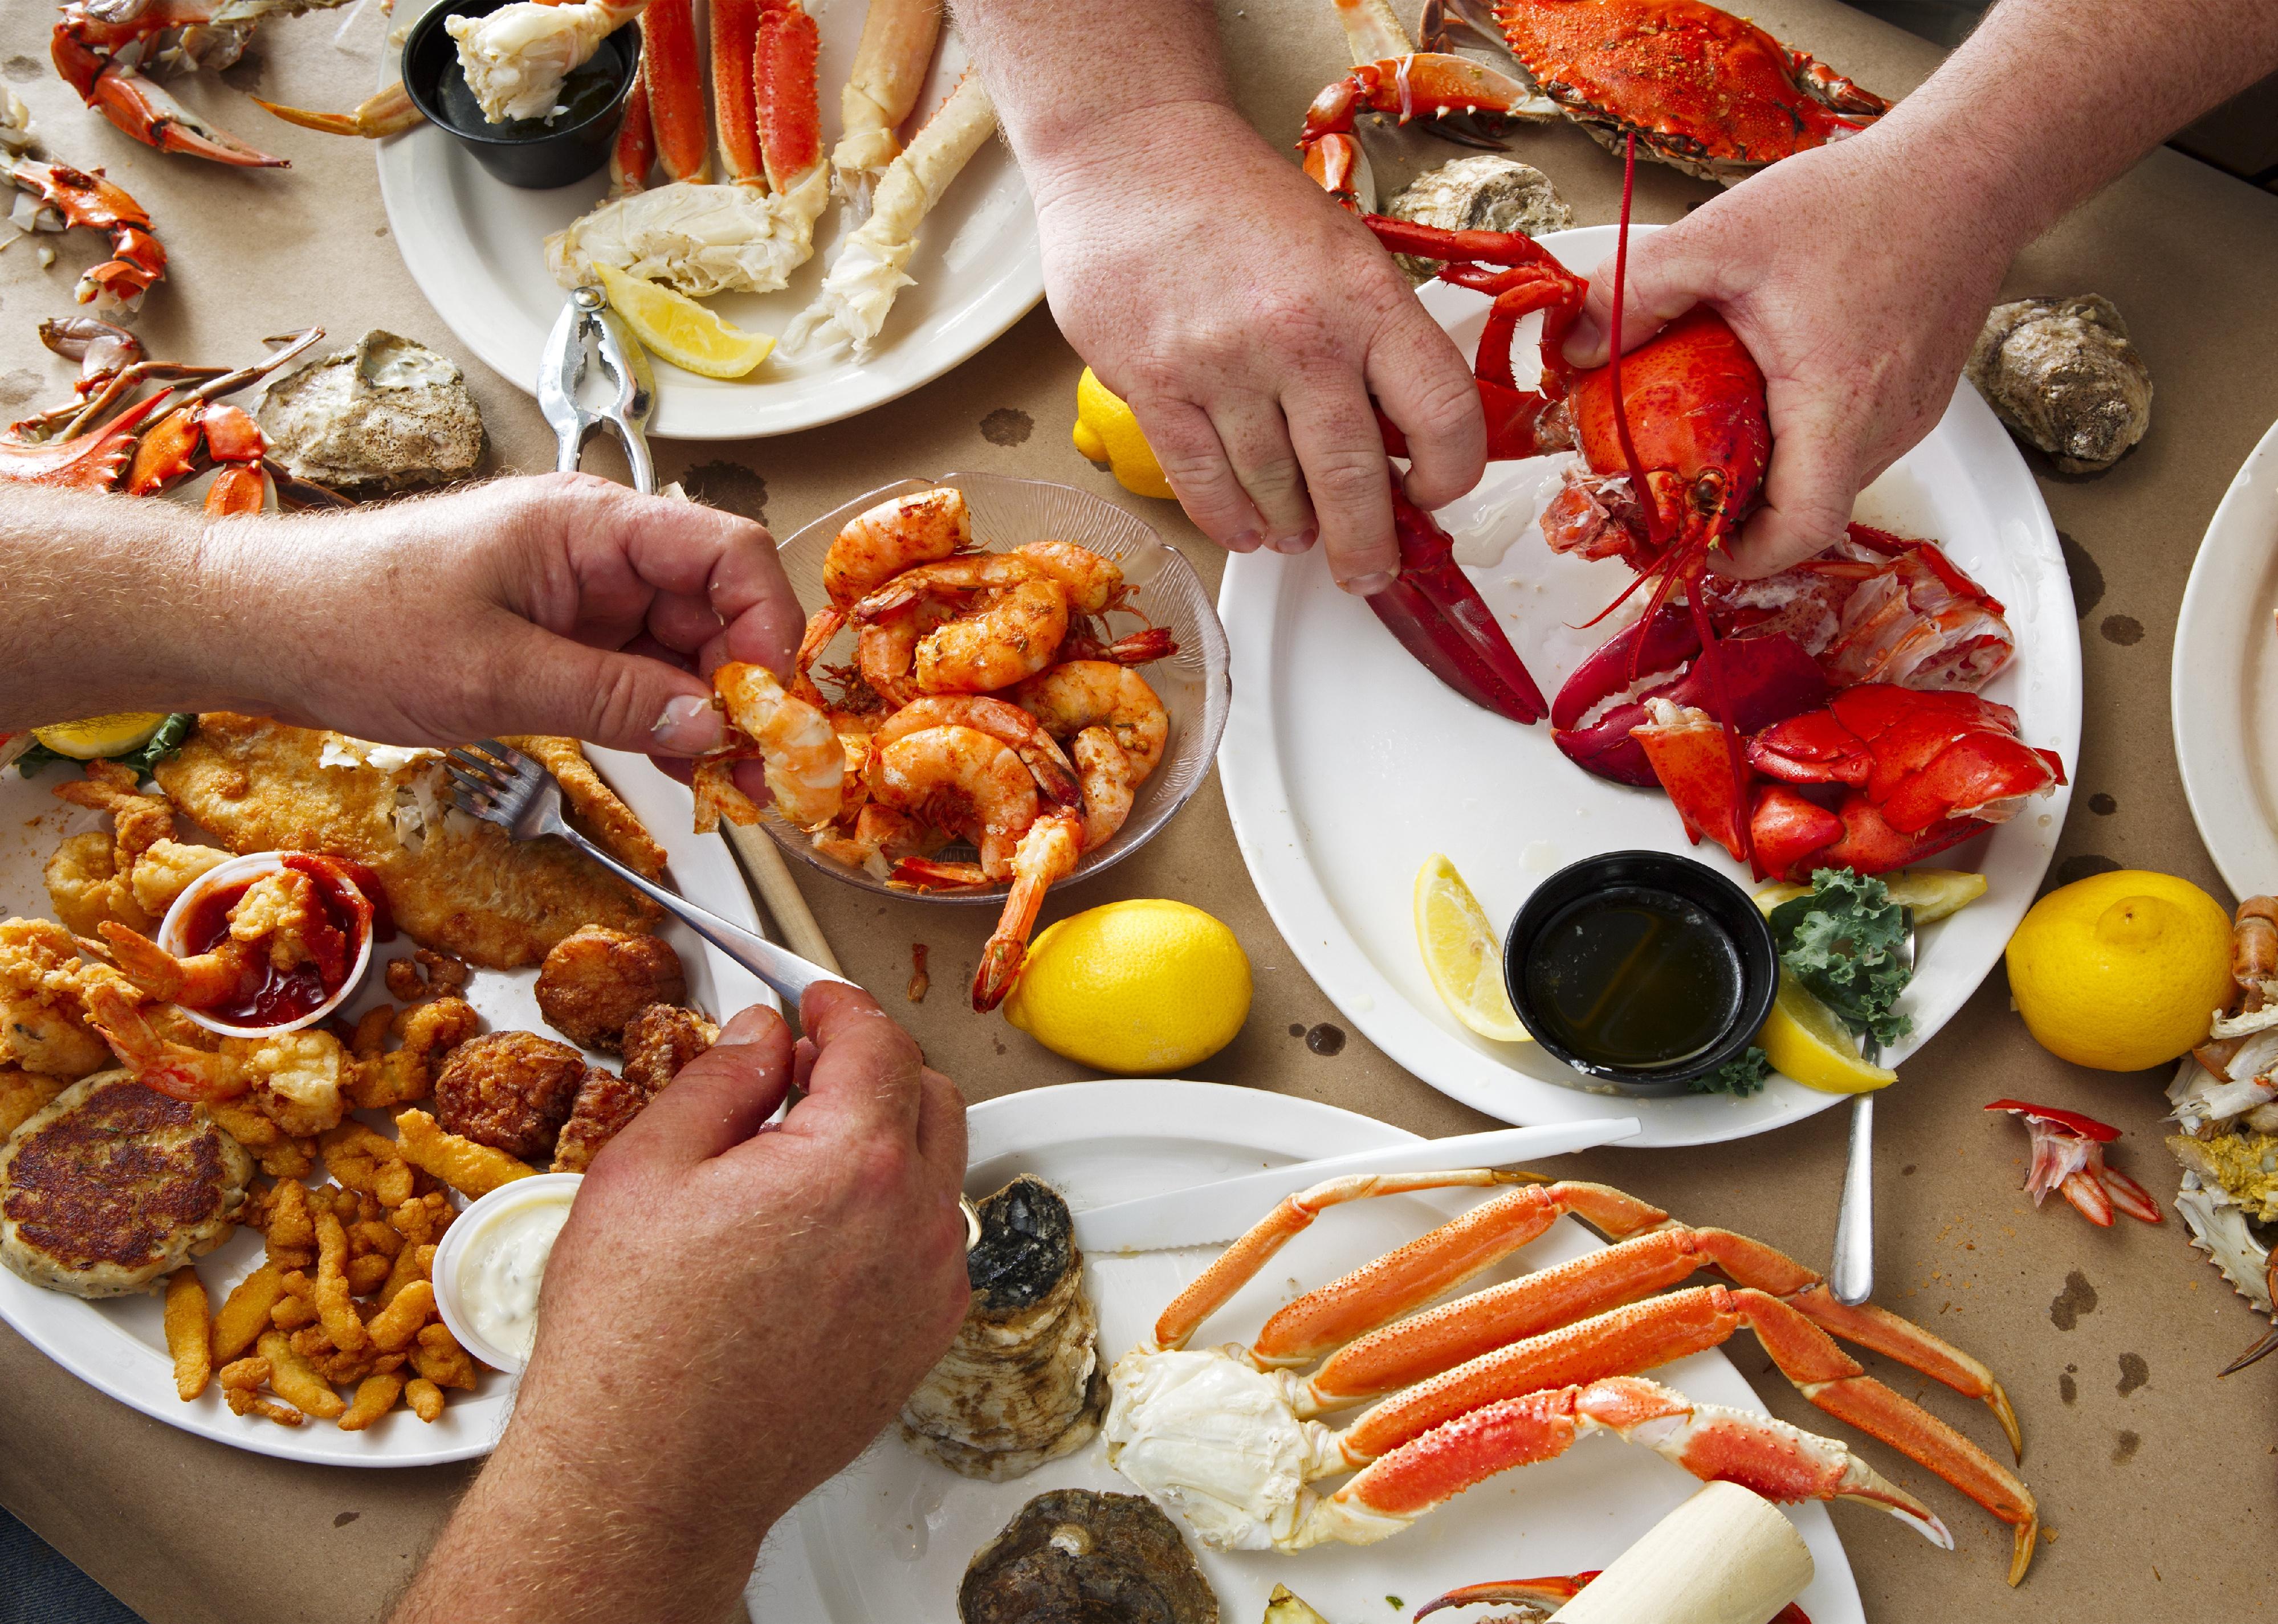 Highestrated Seafood Restaurants in Orlando, According to Tripadvisor